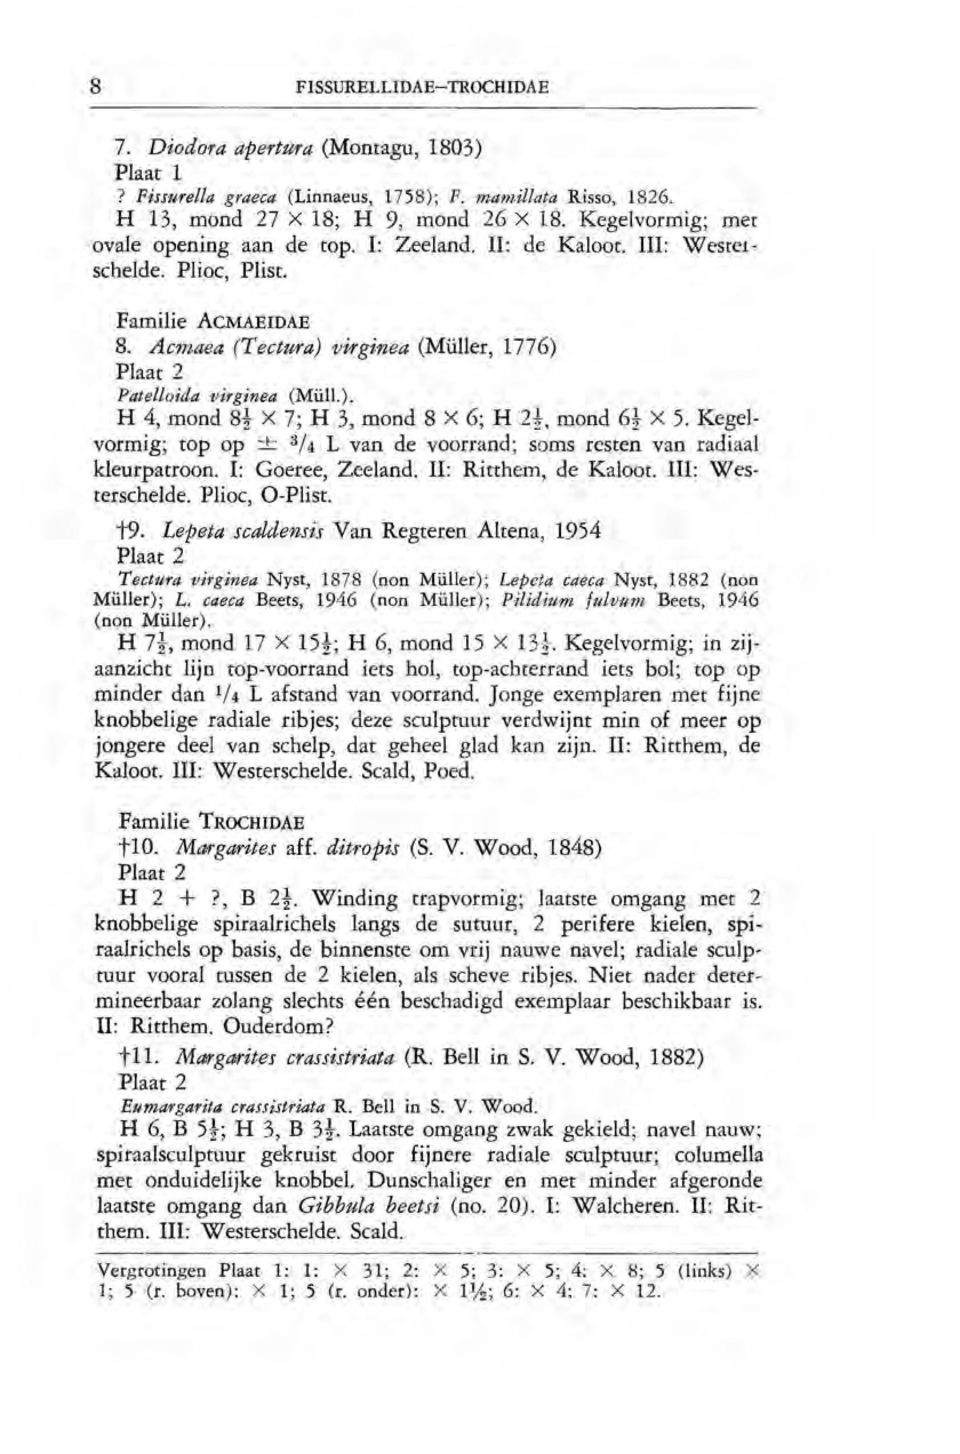 Acmaea (Tectura) virginea (Milller, 1776) Plaat 2 Patelloida virginea (Mull.). H 4, mond 8t X 7; H 3, mond 8 X 6; H 2t, mond 6t X 5.